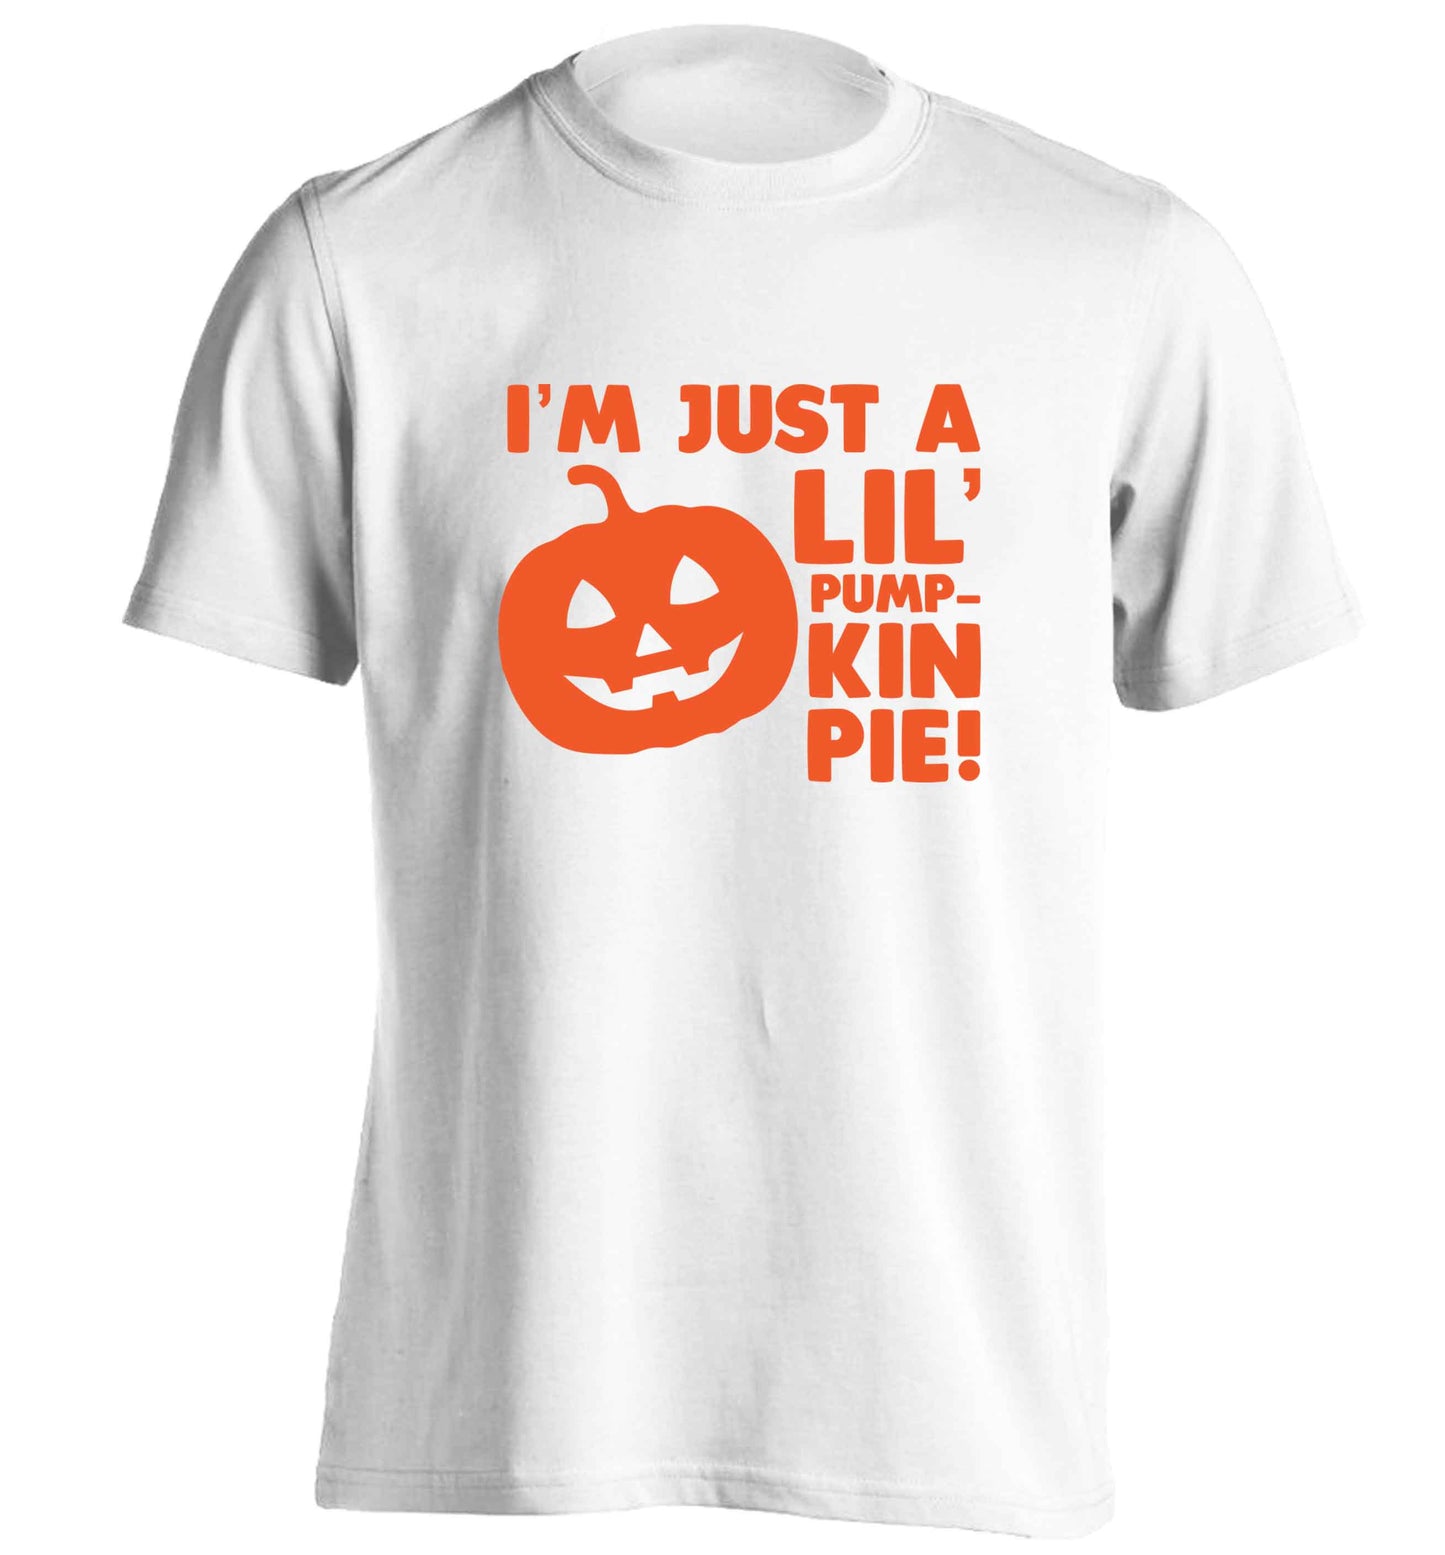 I'm just a lil' pumpkin pie adults unisex white Tshirt 2XL